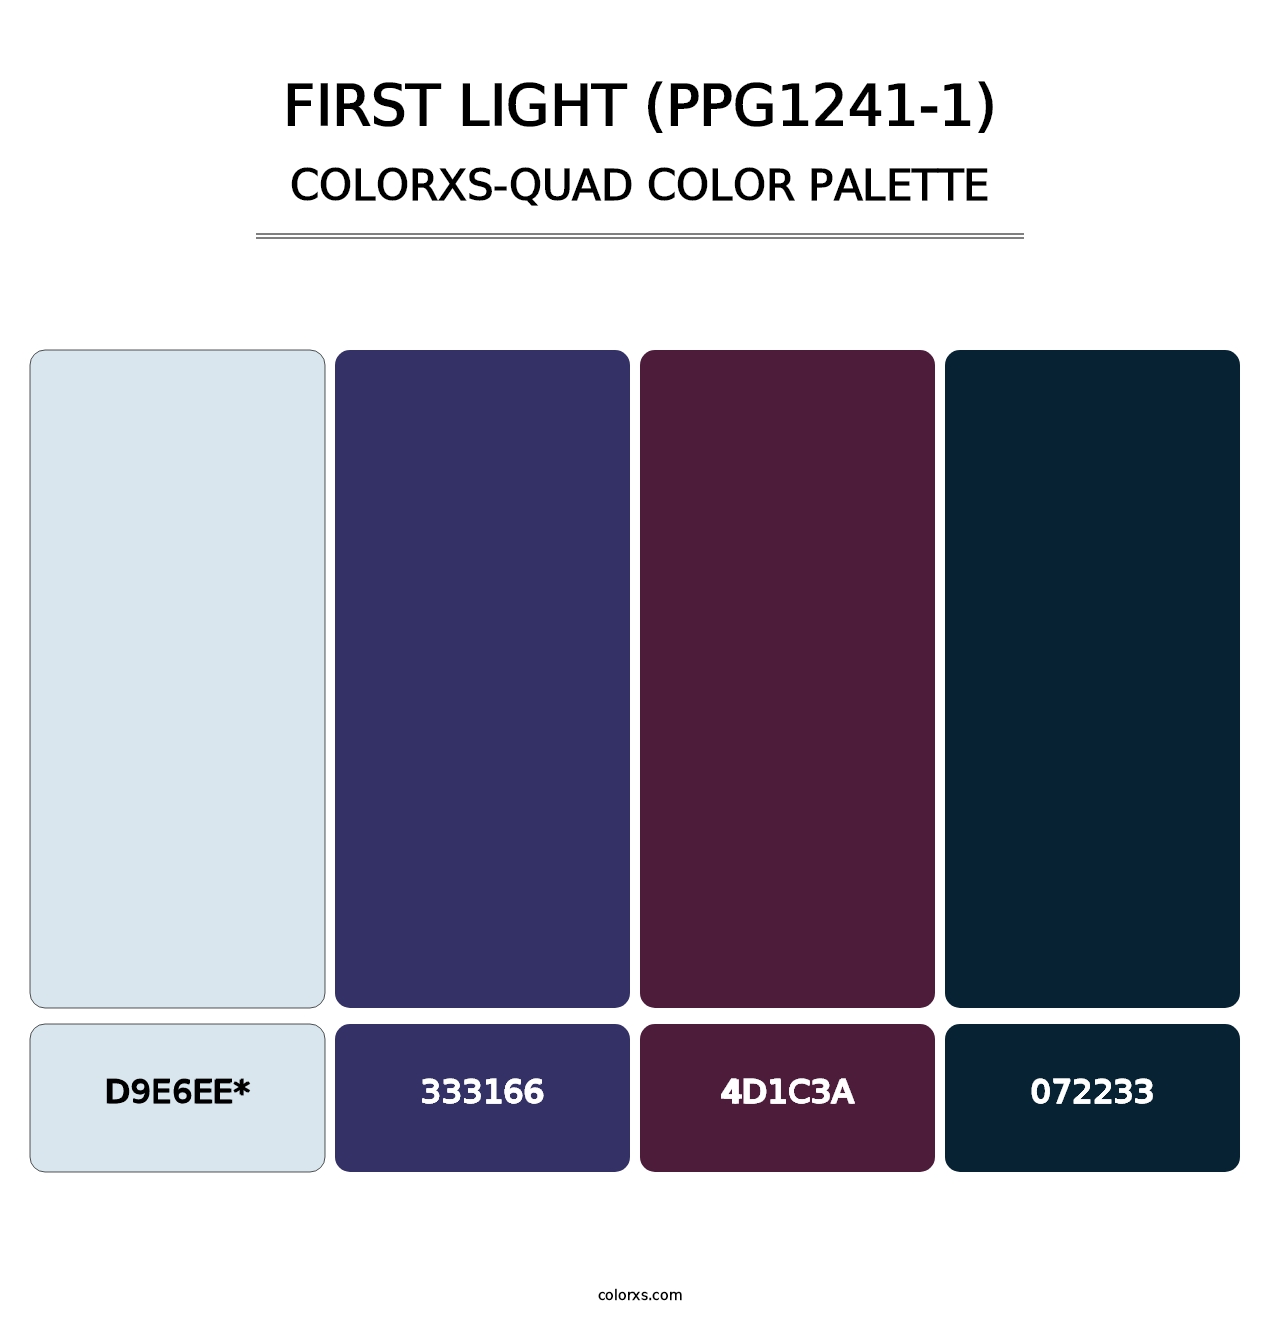 First Light (PPG1241-1) - Colorxs Quad Palette